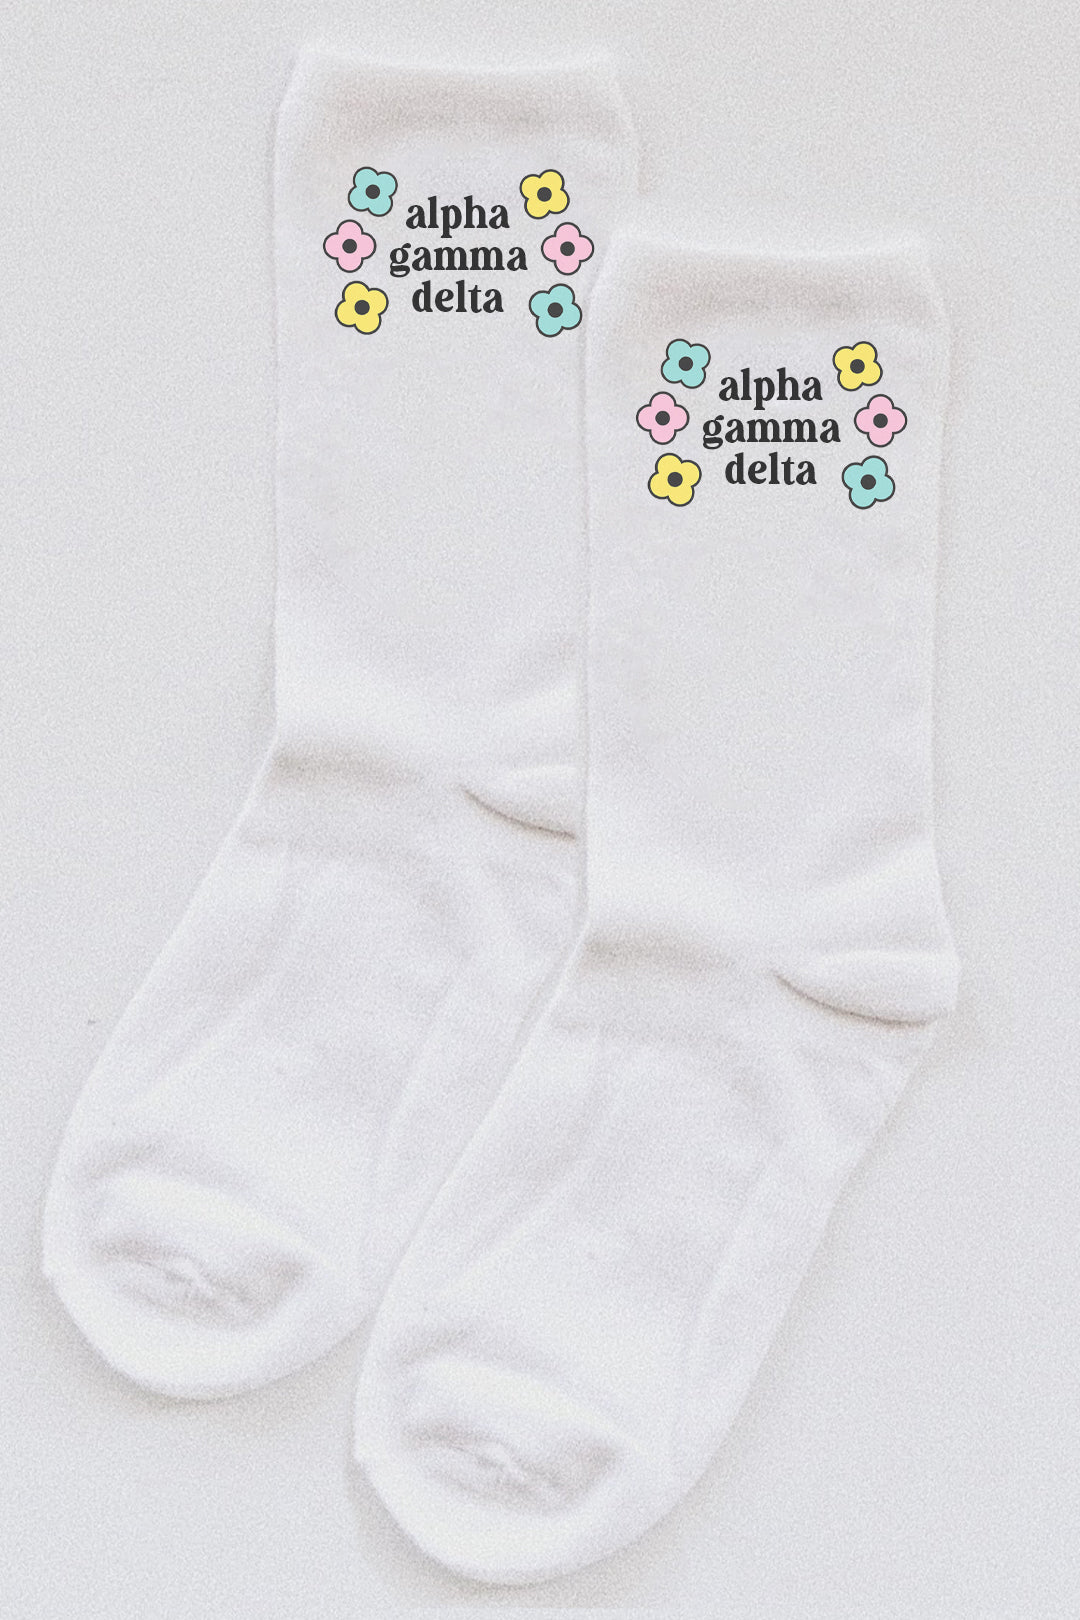 Flower socks - Alpha Gamma Delta - Spikes and Seams Greek